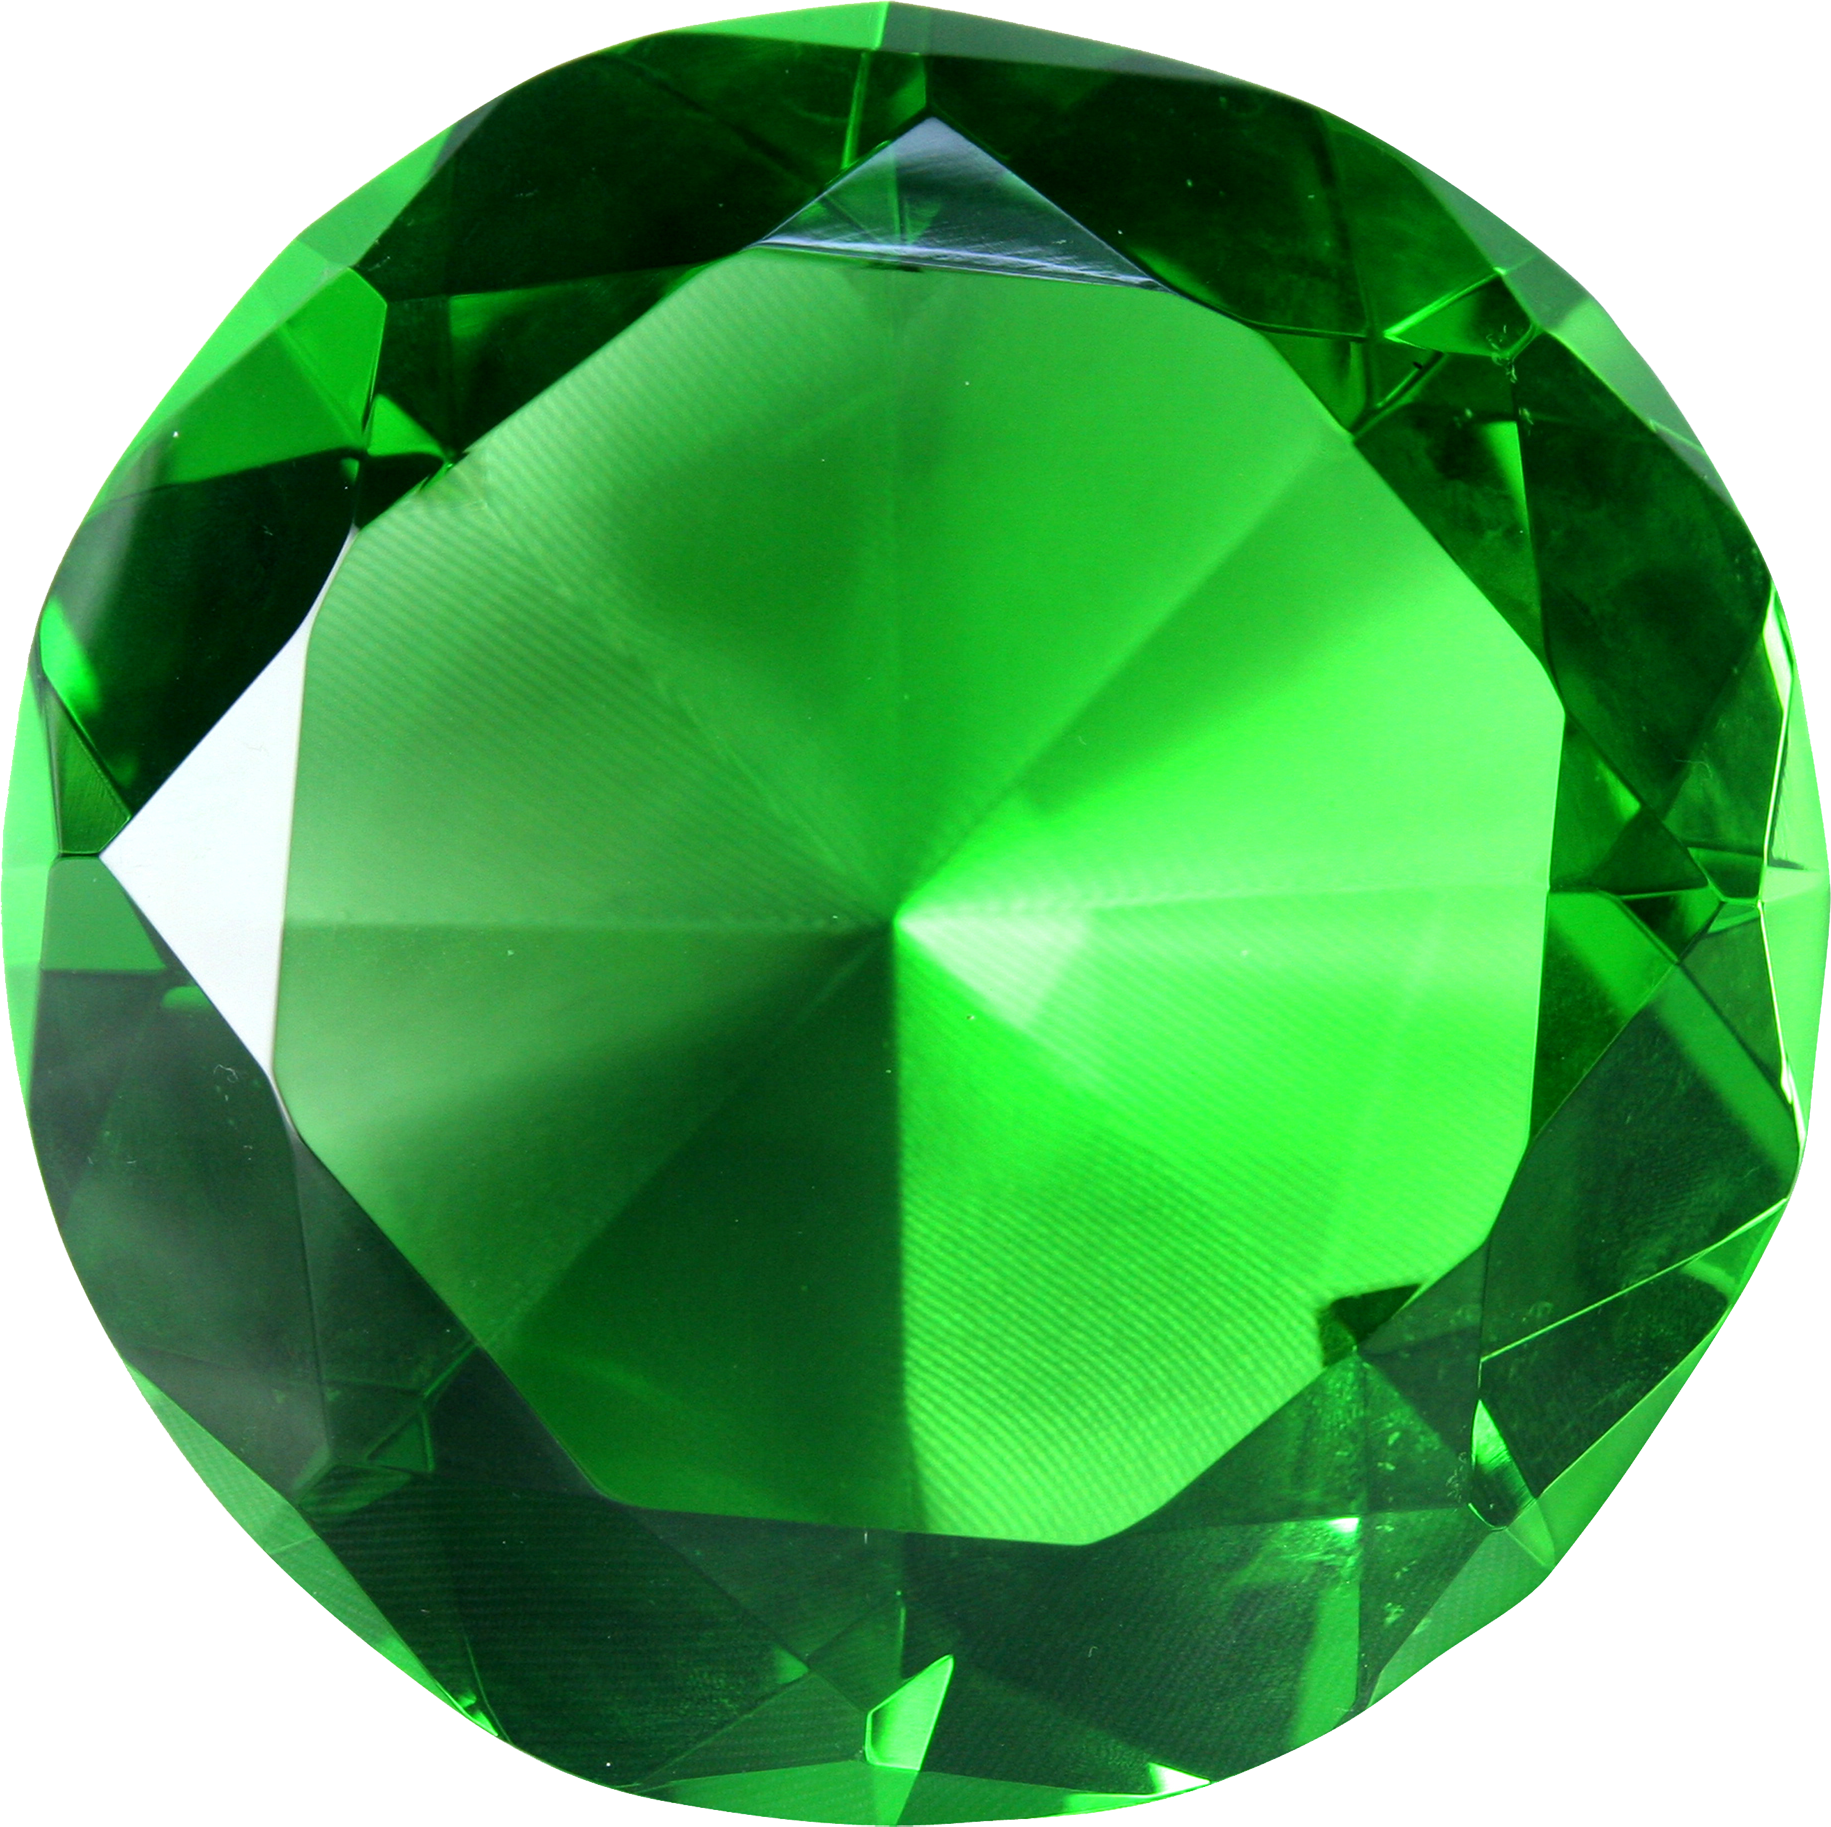 gem clipart minecraft emerald